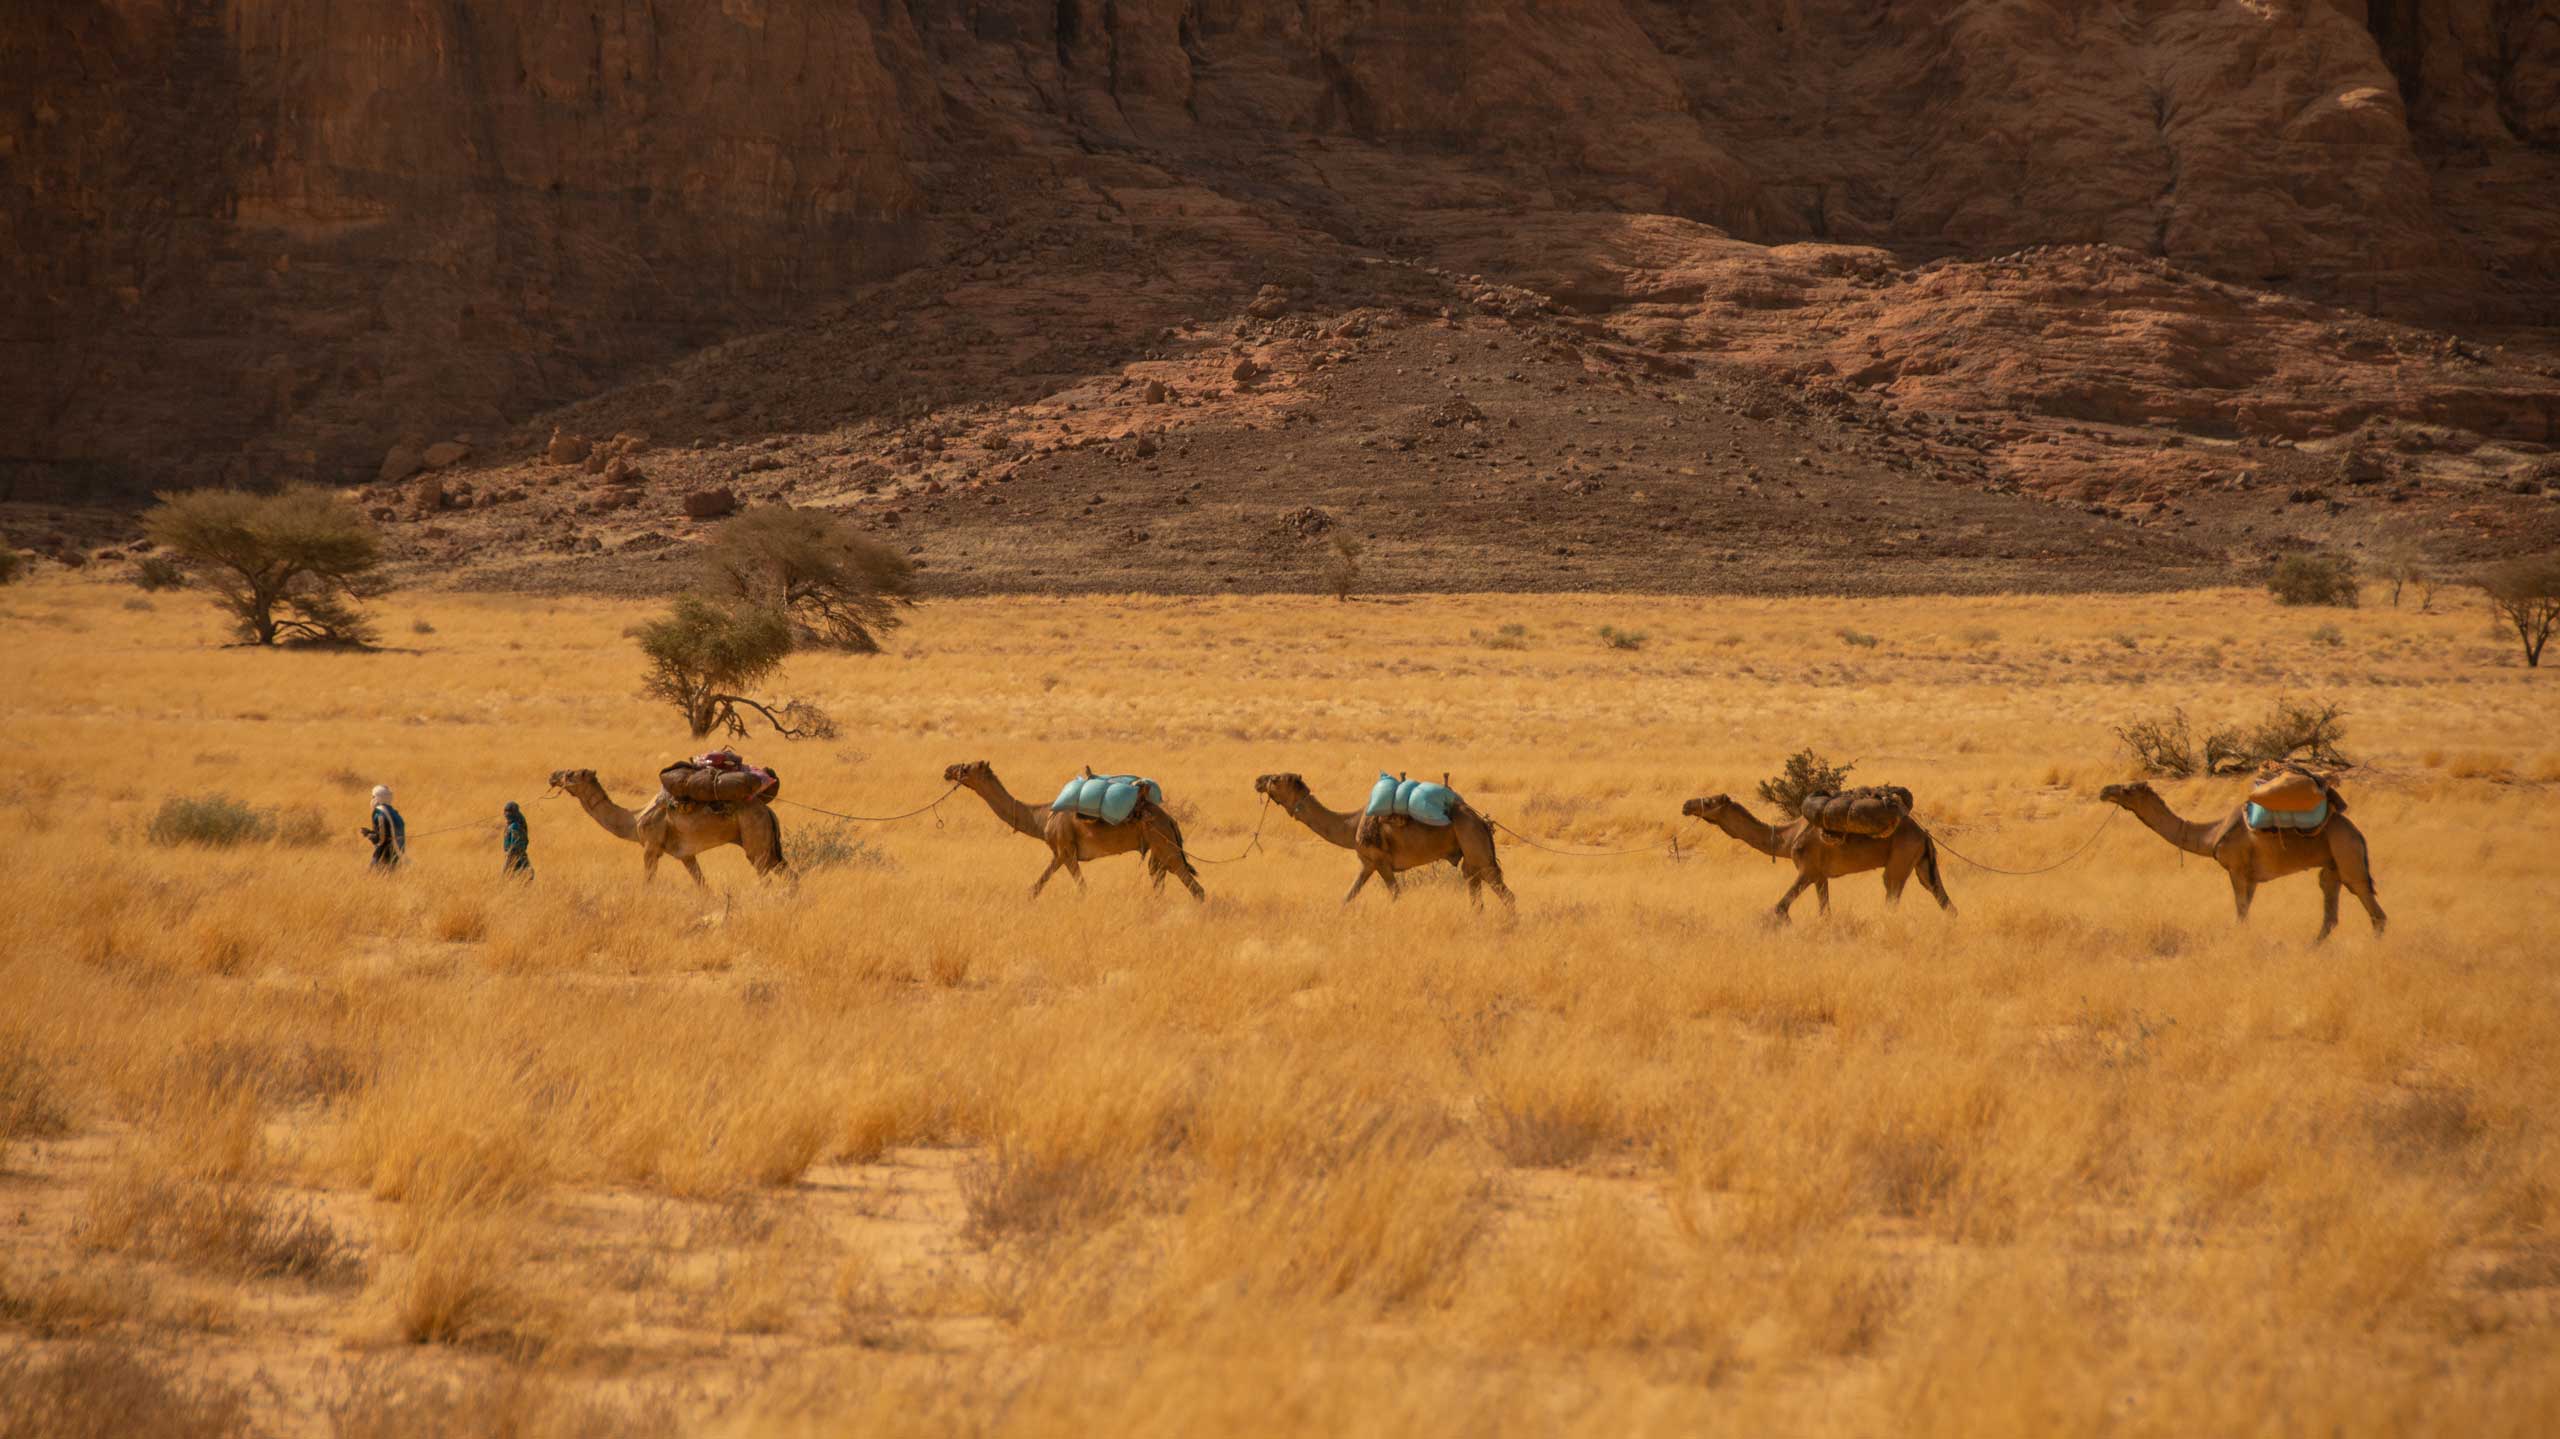 Camel trekking in the Ennedi Desert in Chad